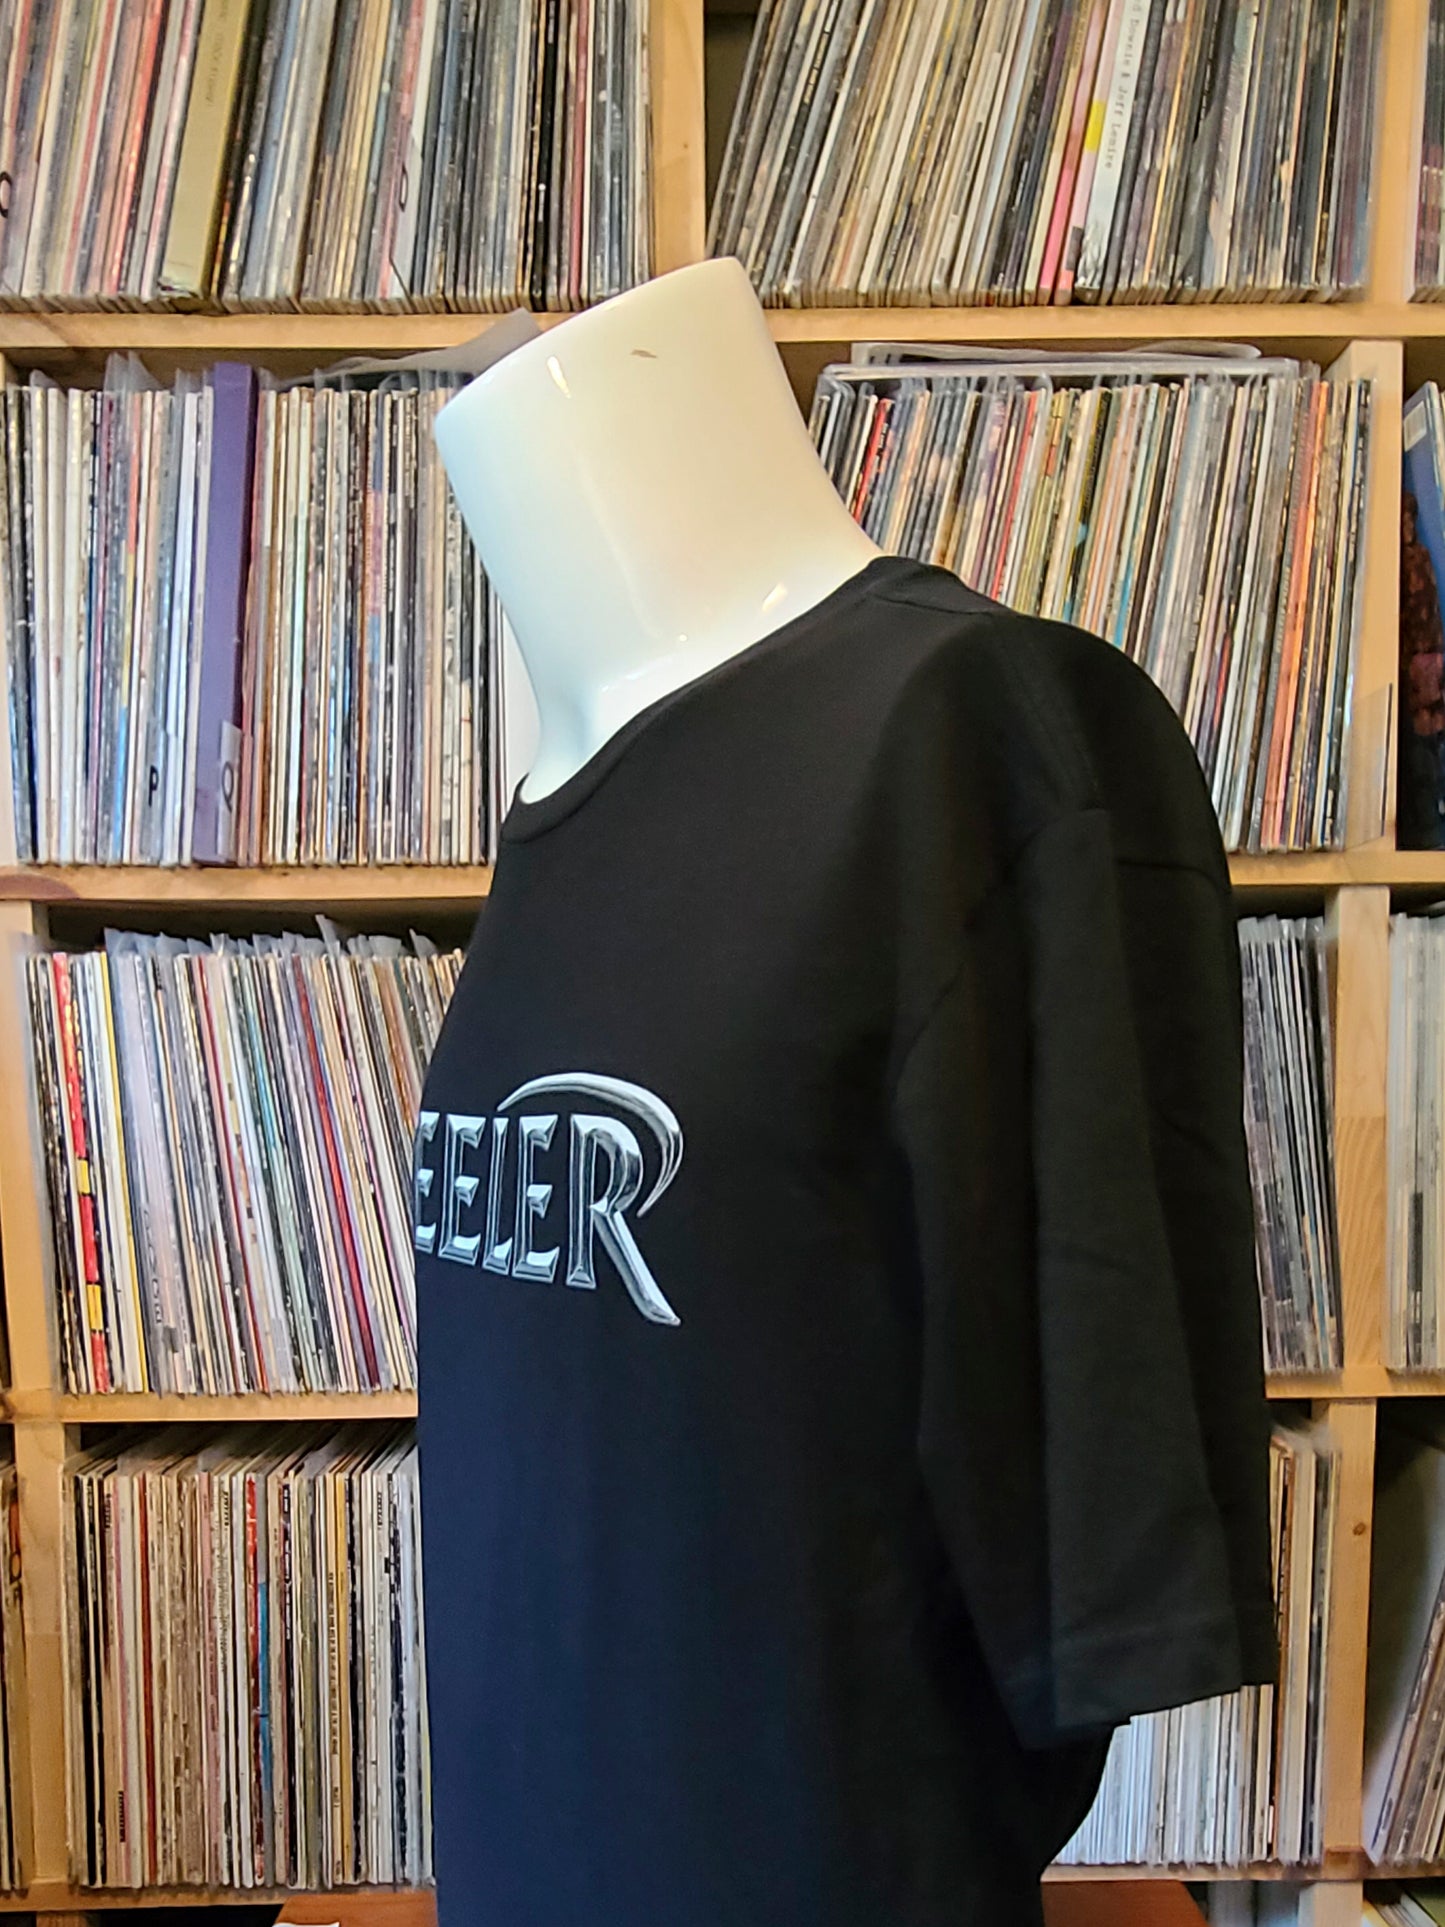 Peeler T-Shirt (Black)